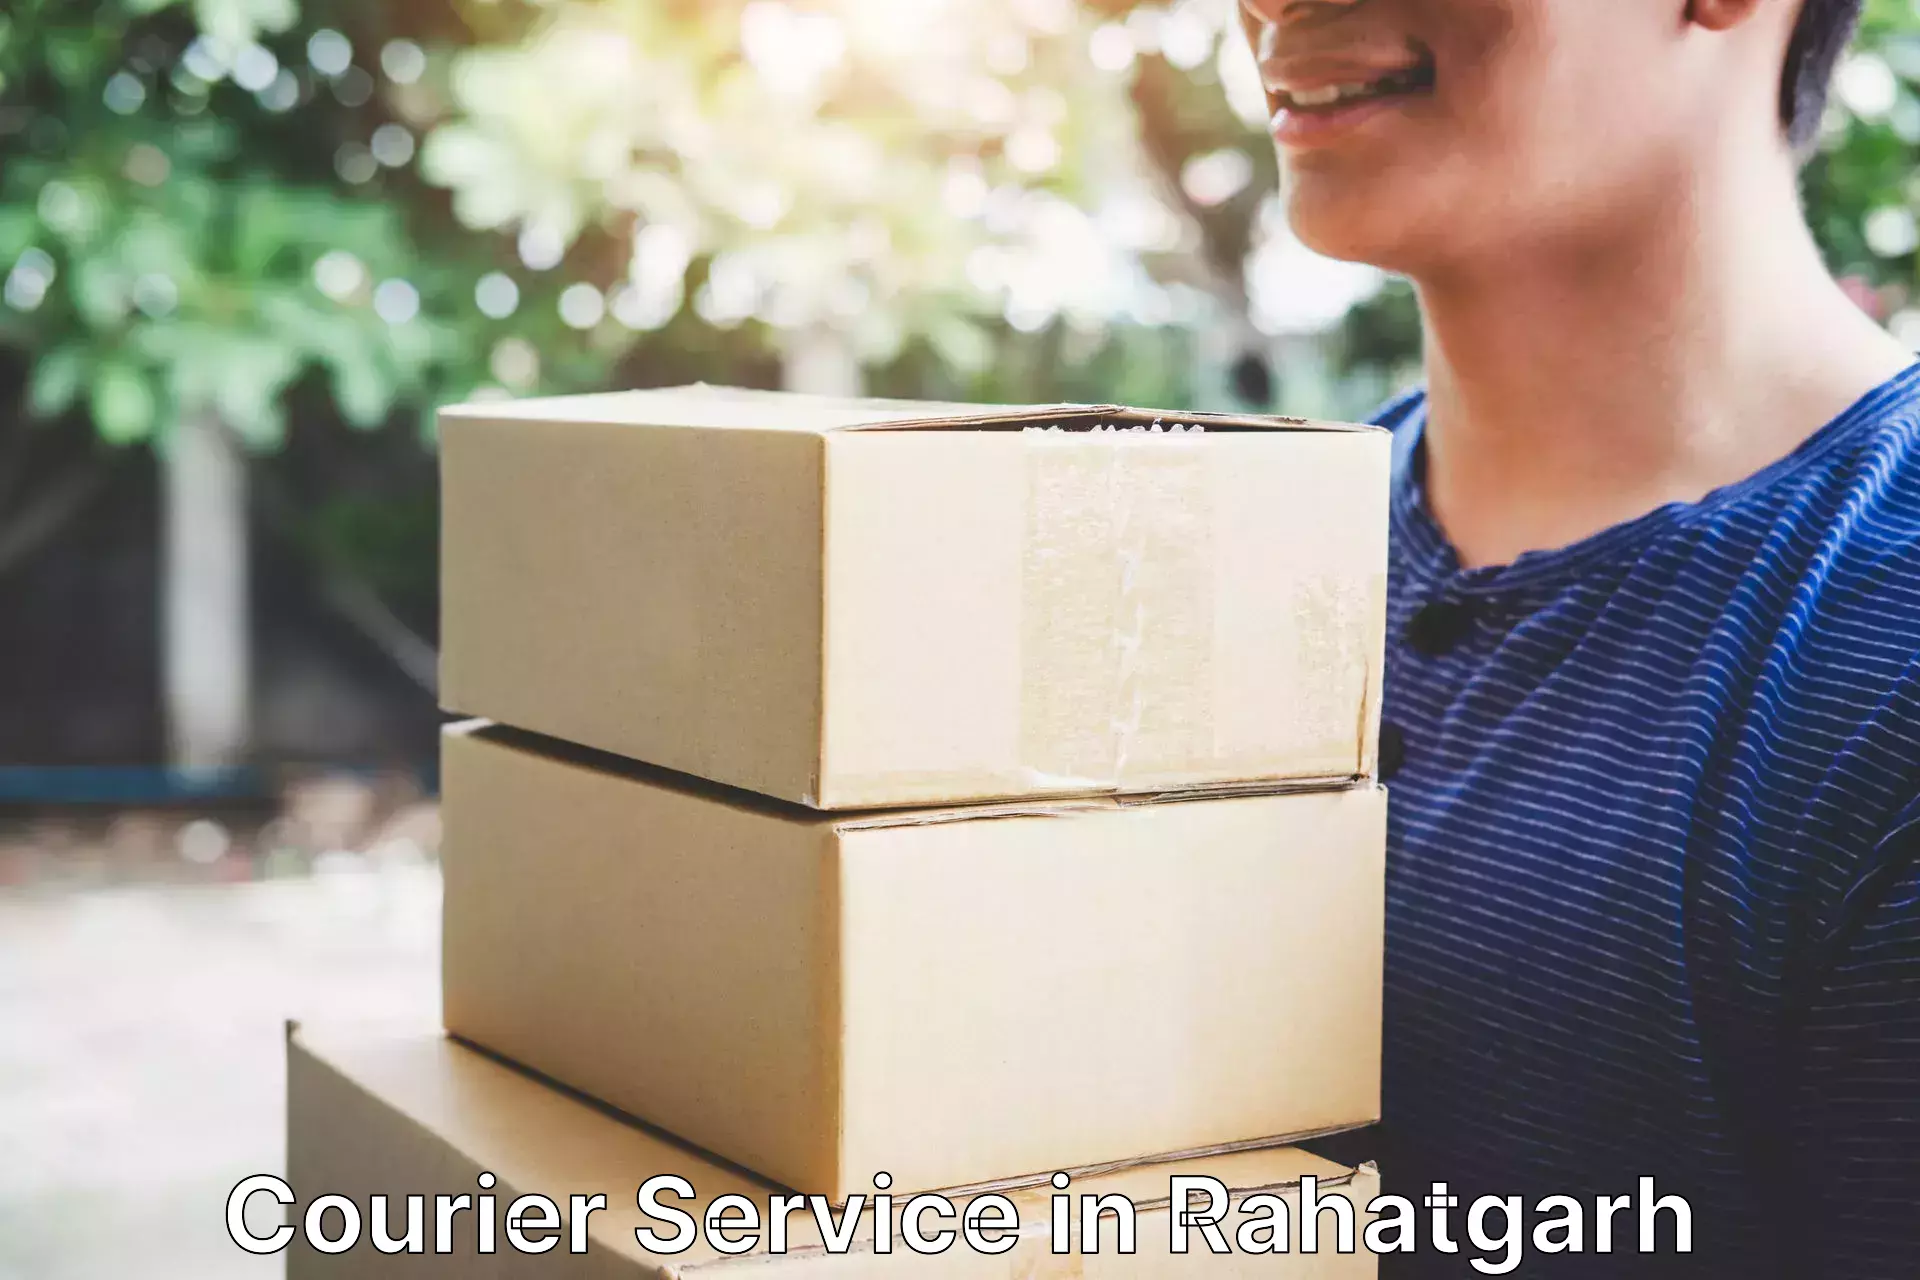 Urban courier service in Rahatgarh